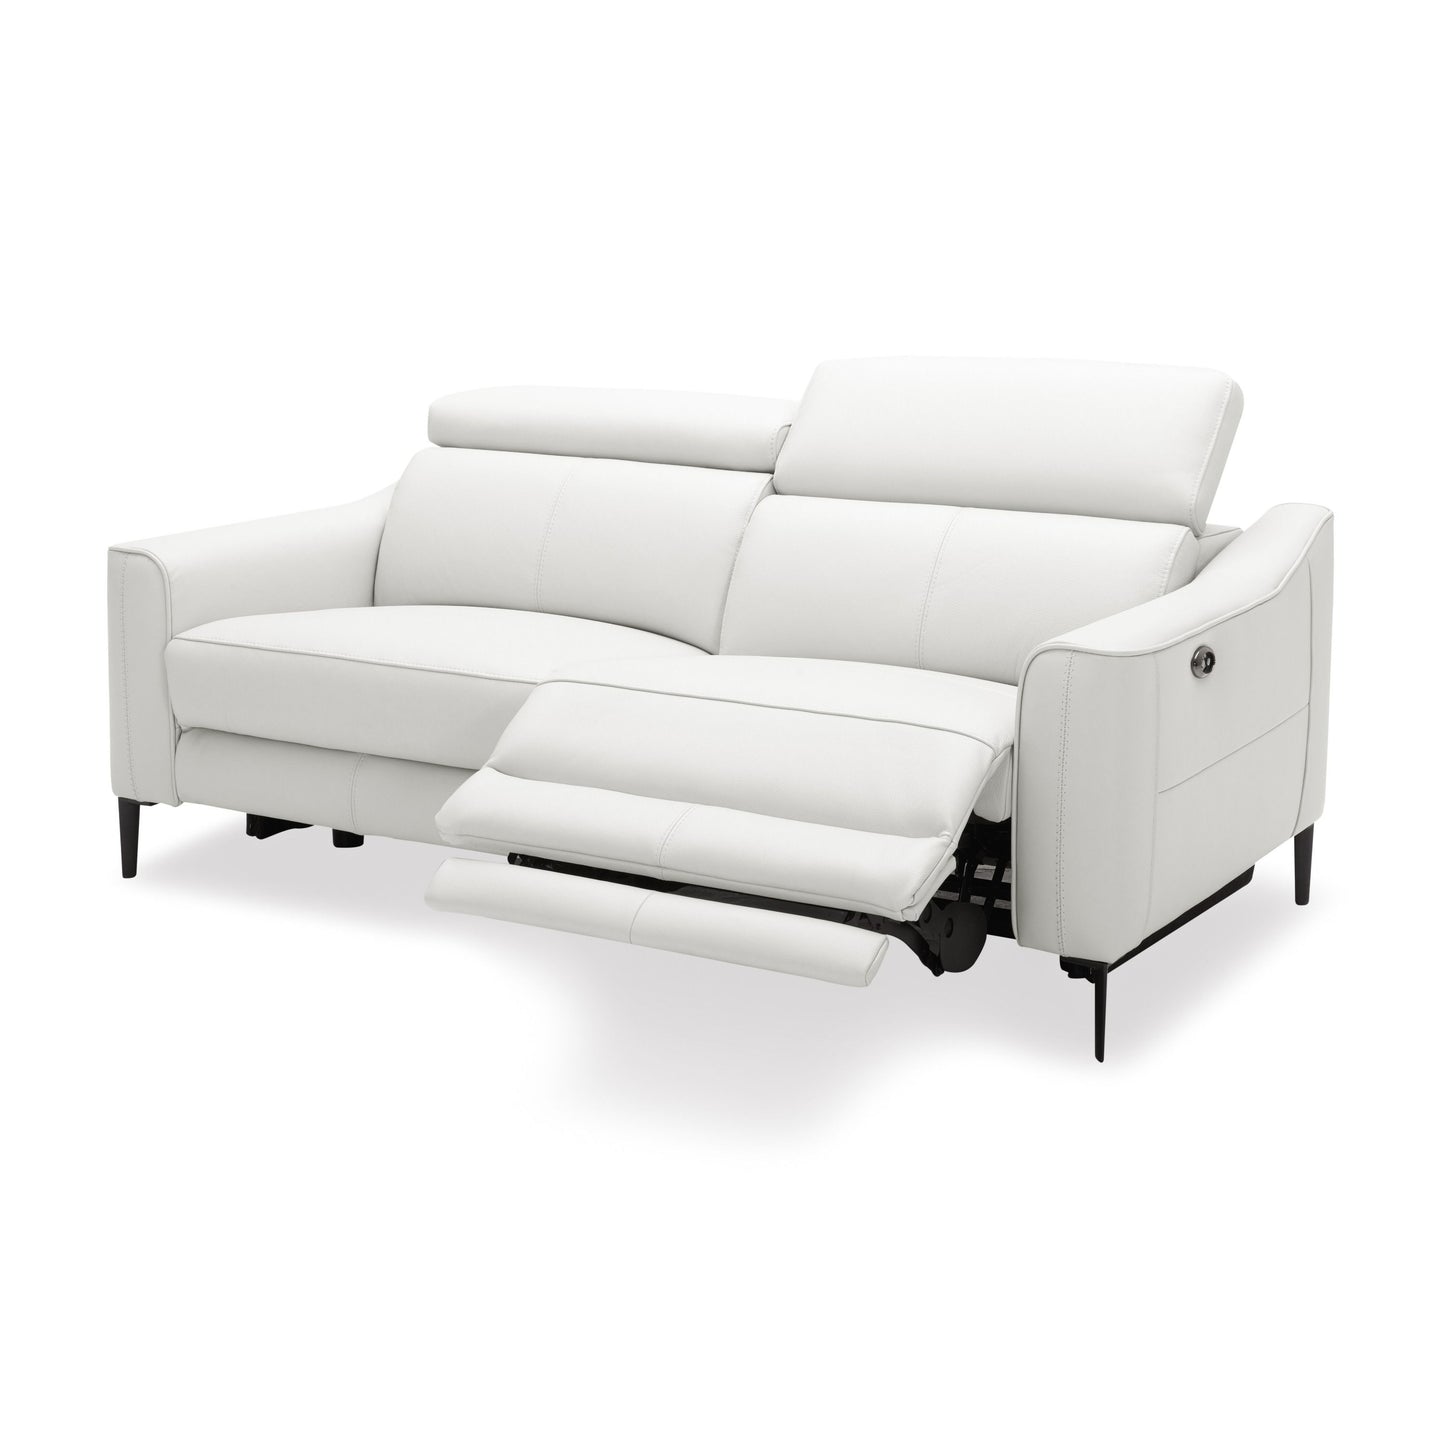 Divani Casa Eden - Modern White Leather Sofa With 2 Recliners